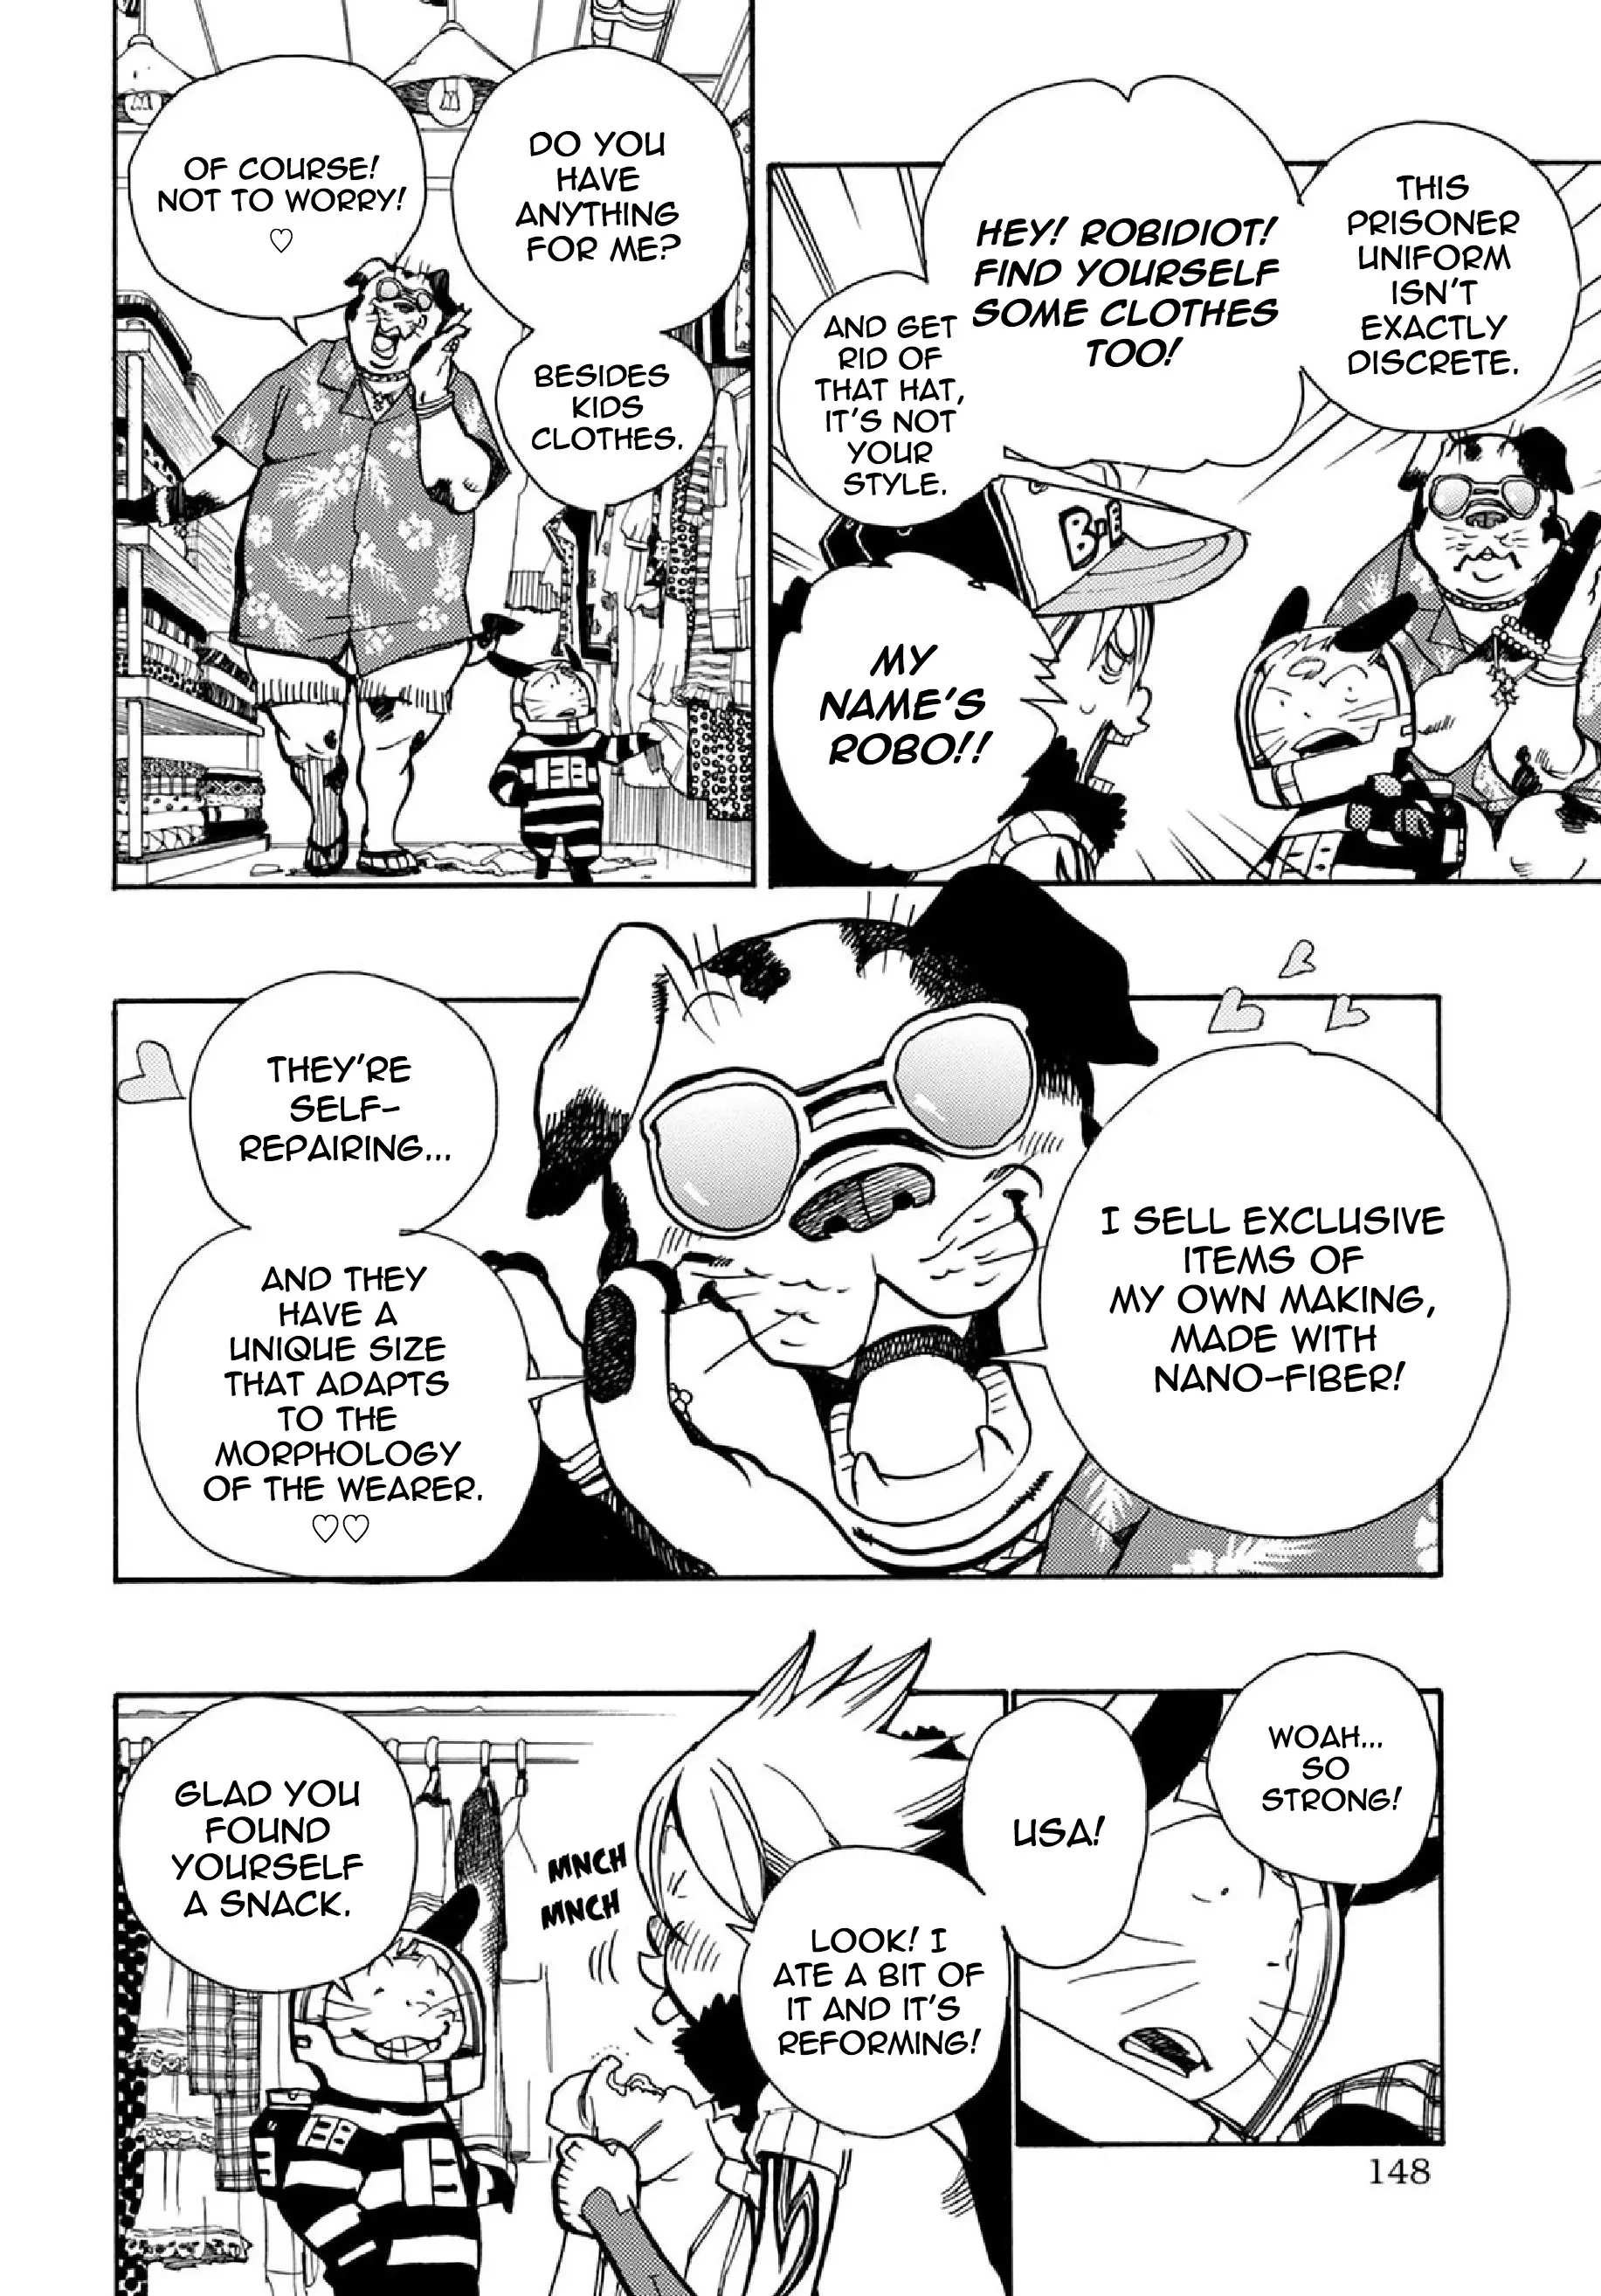 Robo To Usakichi - 3 page 11-89f97aa9